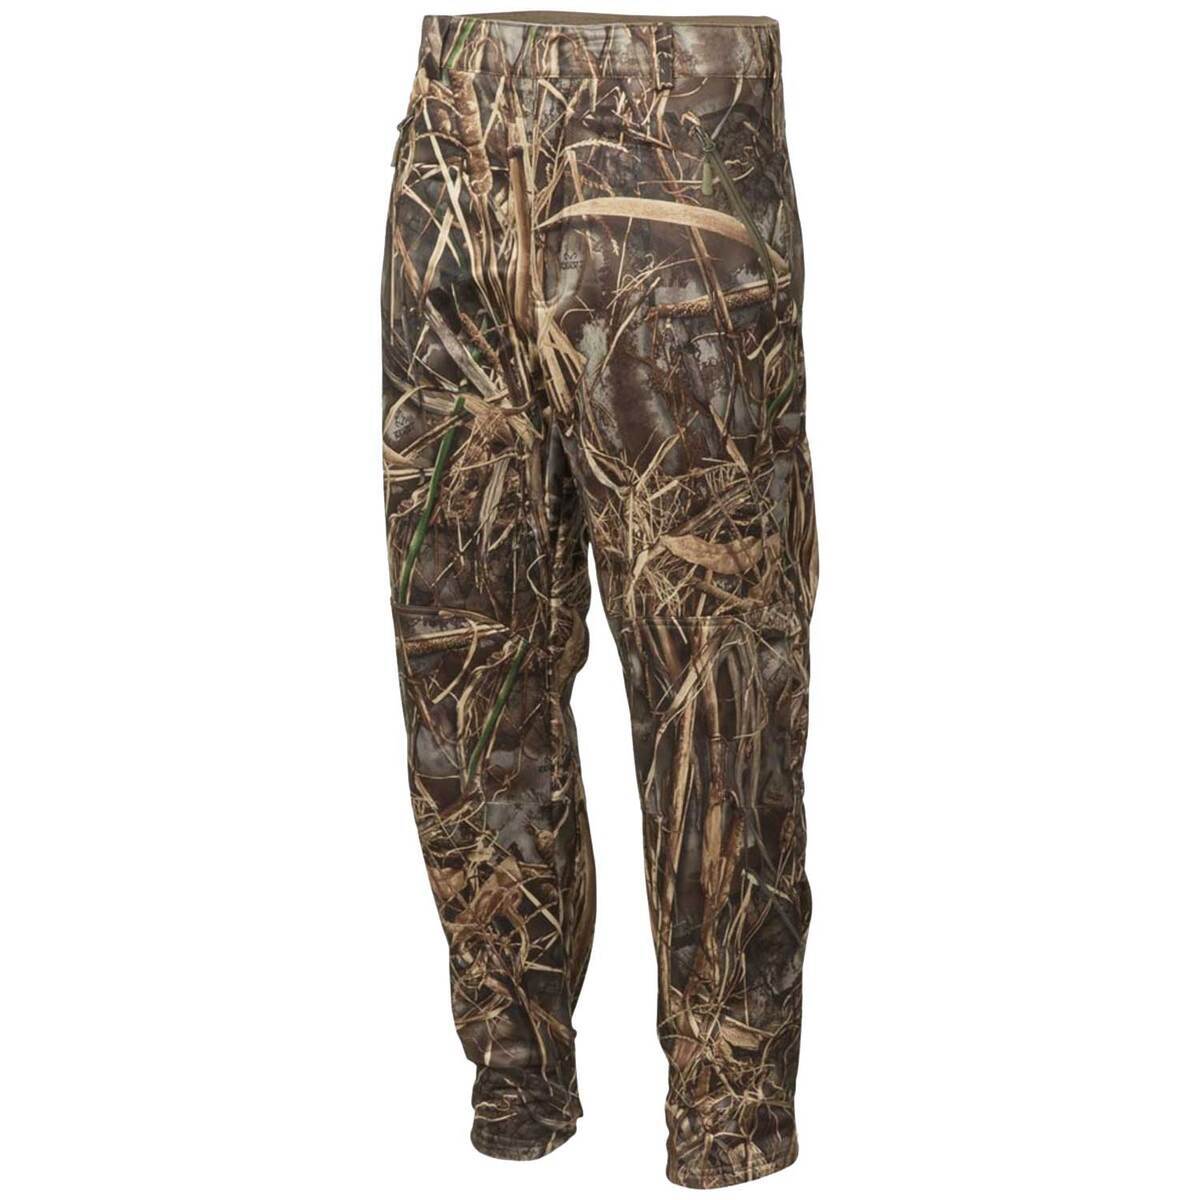 Banded Men's Max-7 White River Wader Hunting Pants | Sportsman's Warehouse